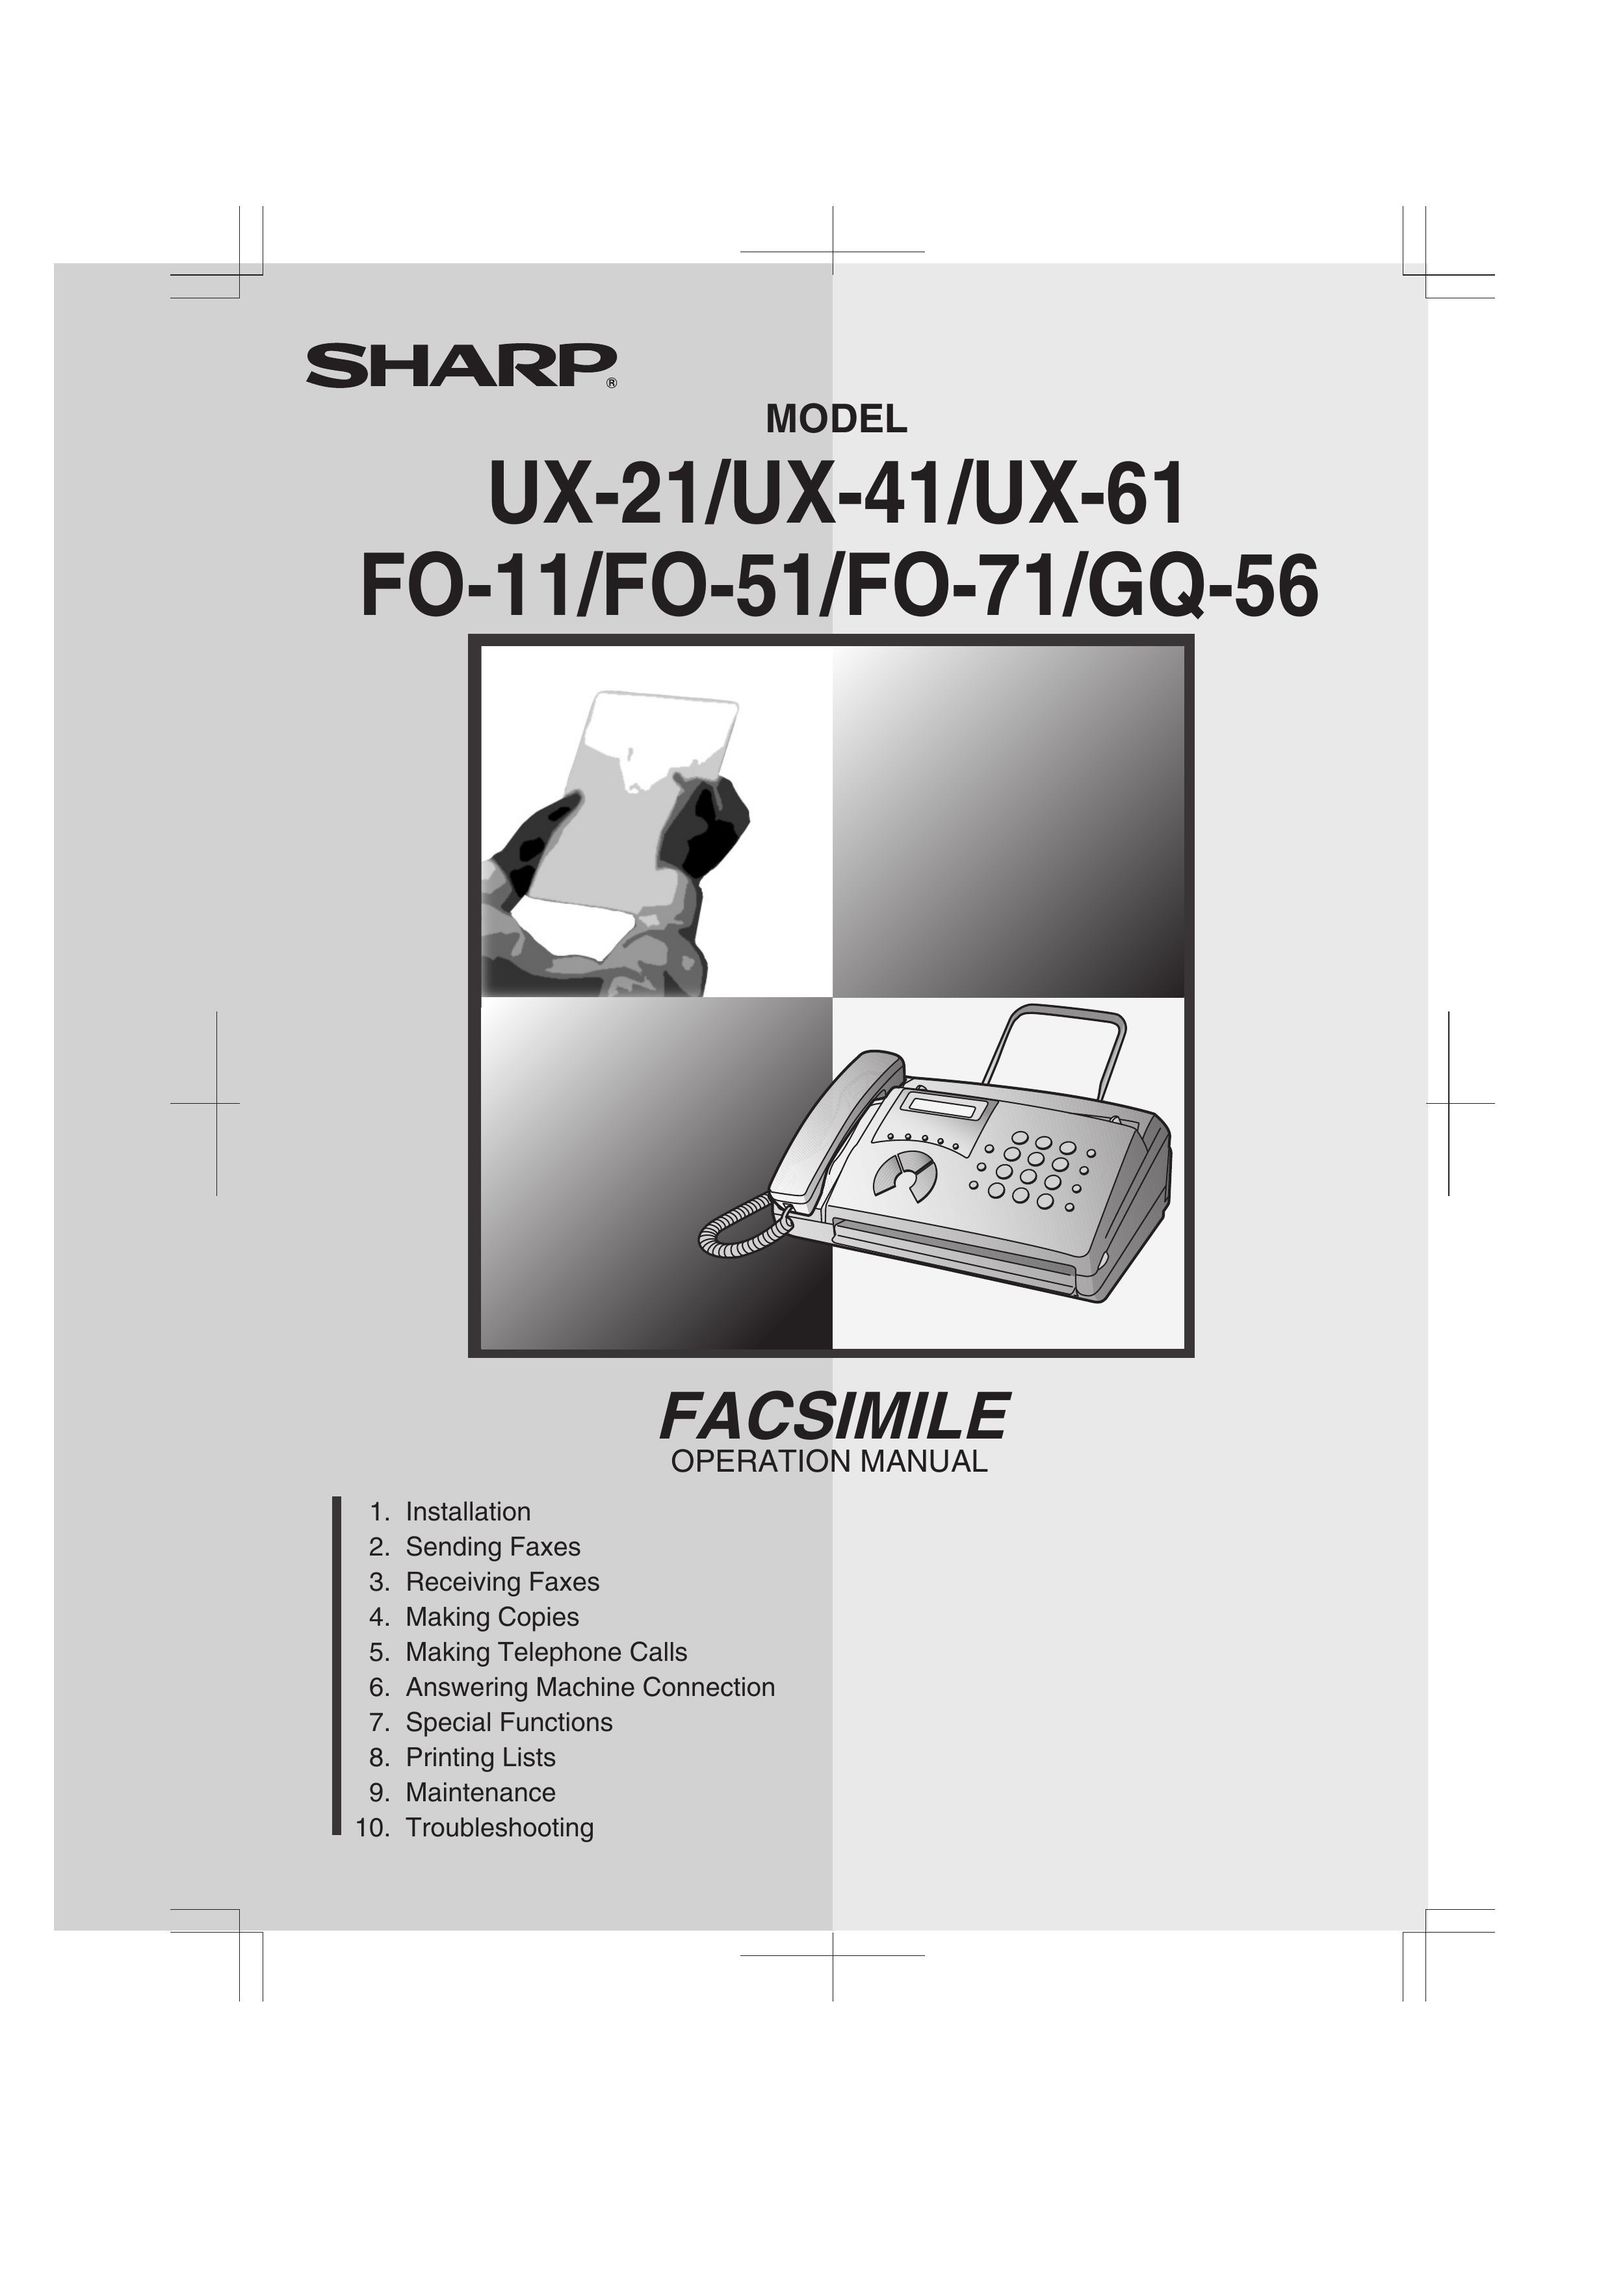 Sharp GQ-56 Fax Machine User Manual